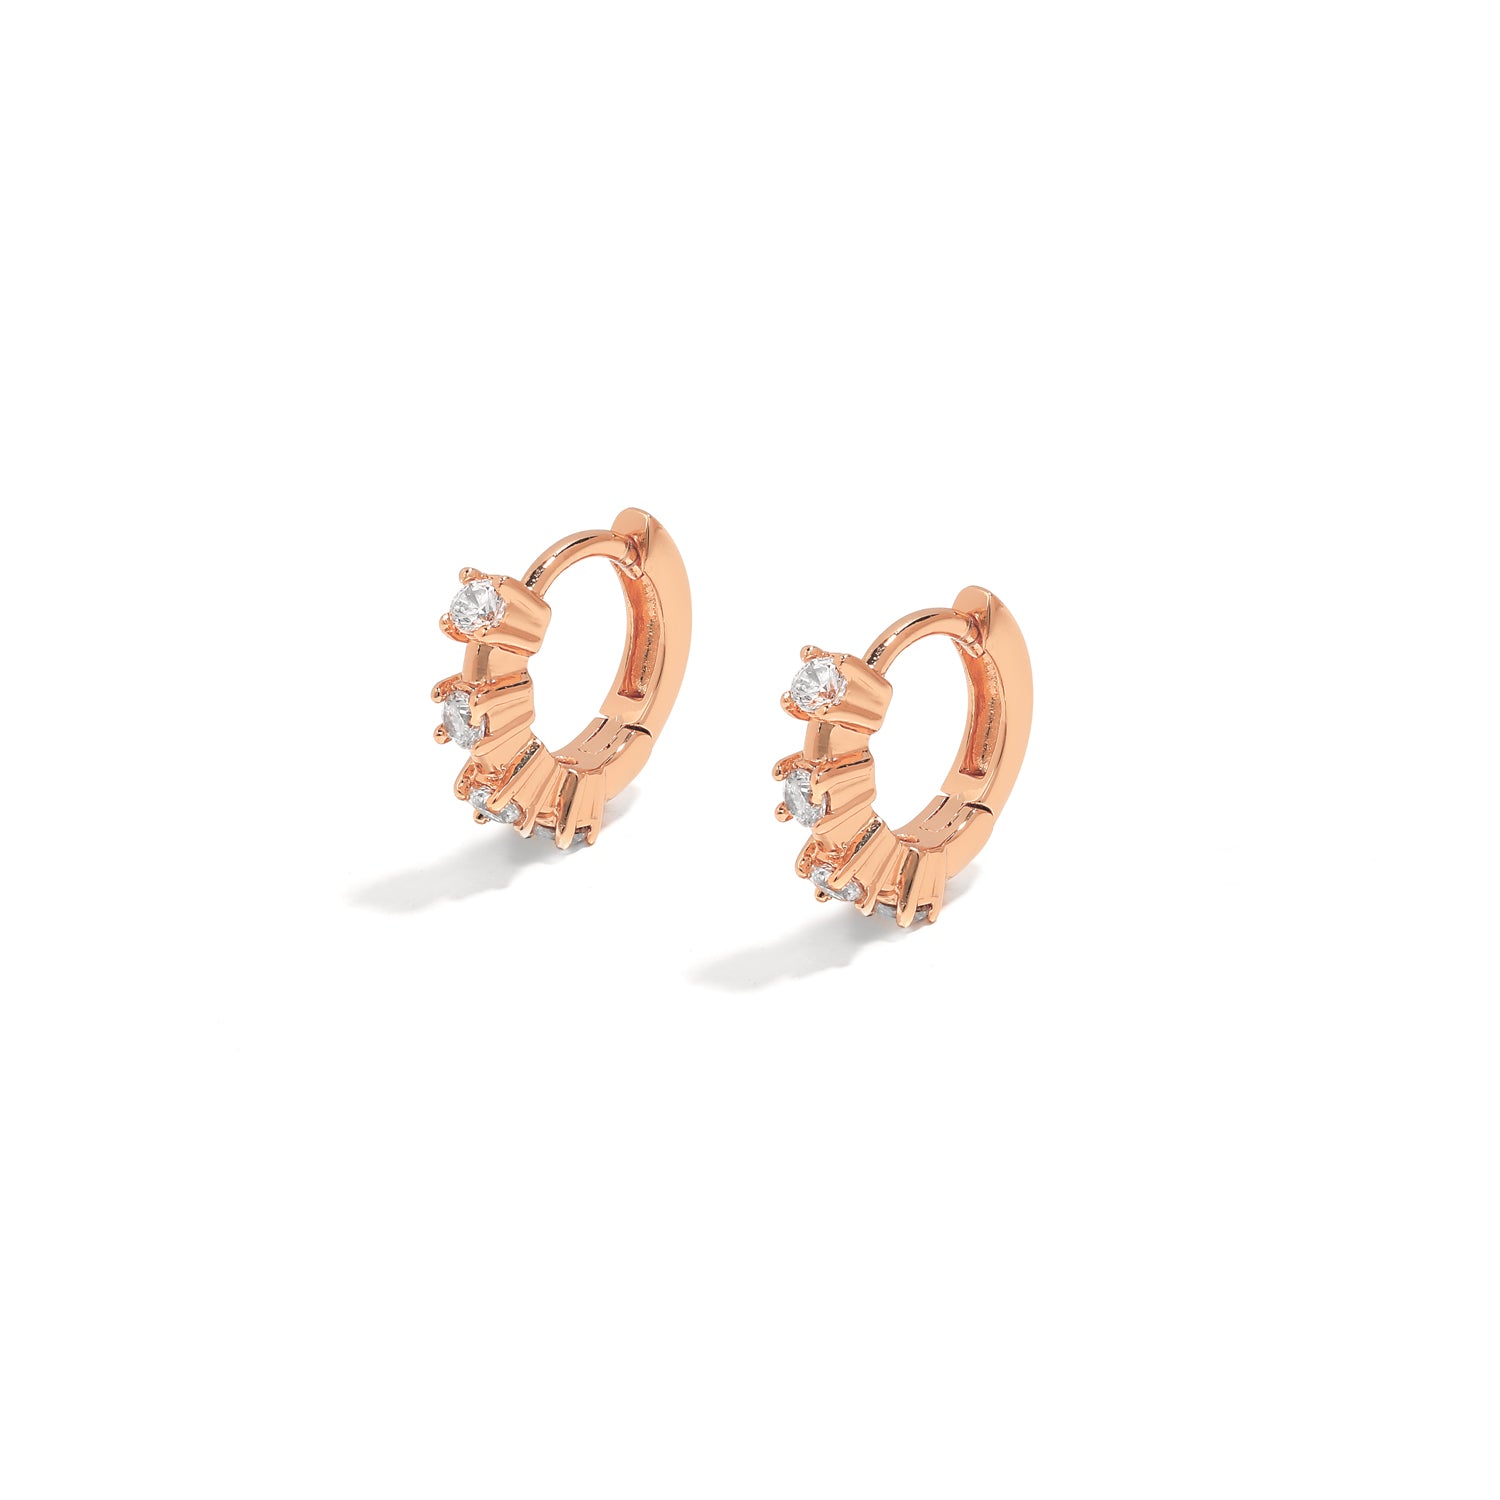 Elegant and statement huggies. Rose gold hoop earrings set with cubic zirconia stones.